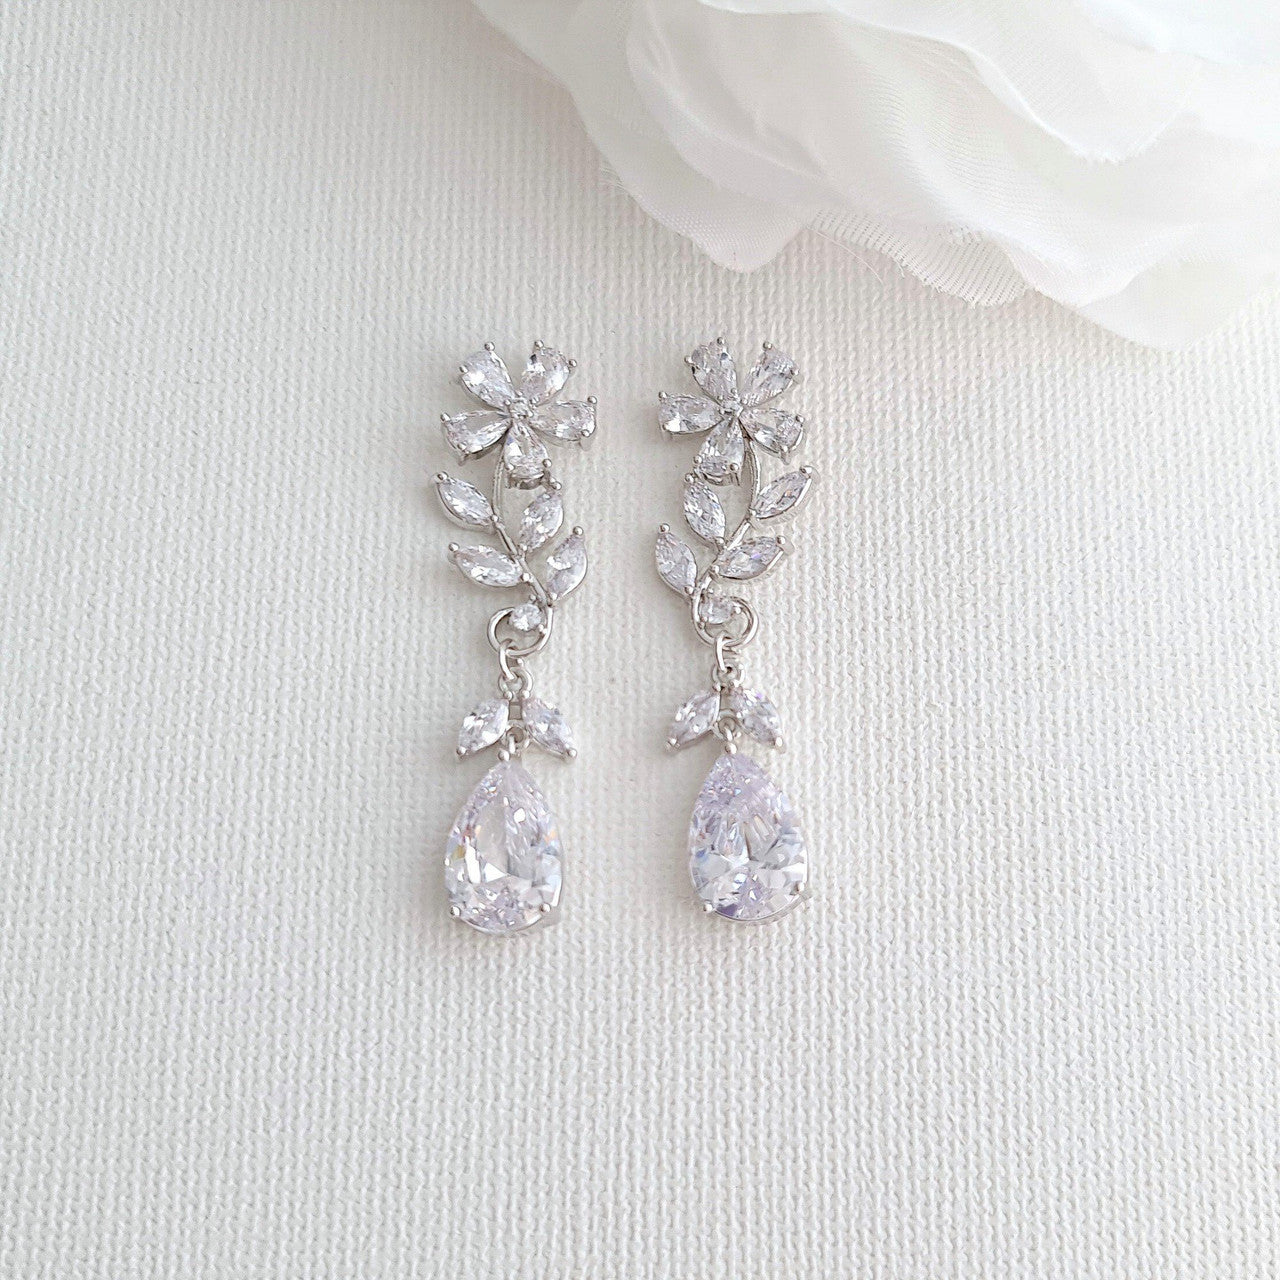 Bridal Flower Crystal Earrings- Daisy